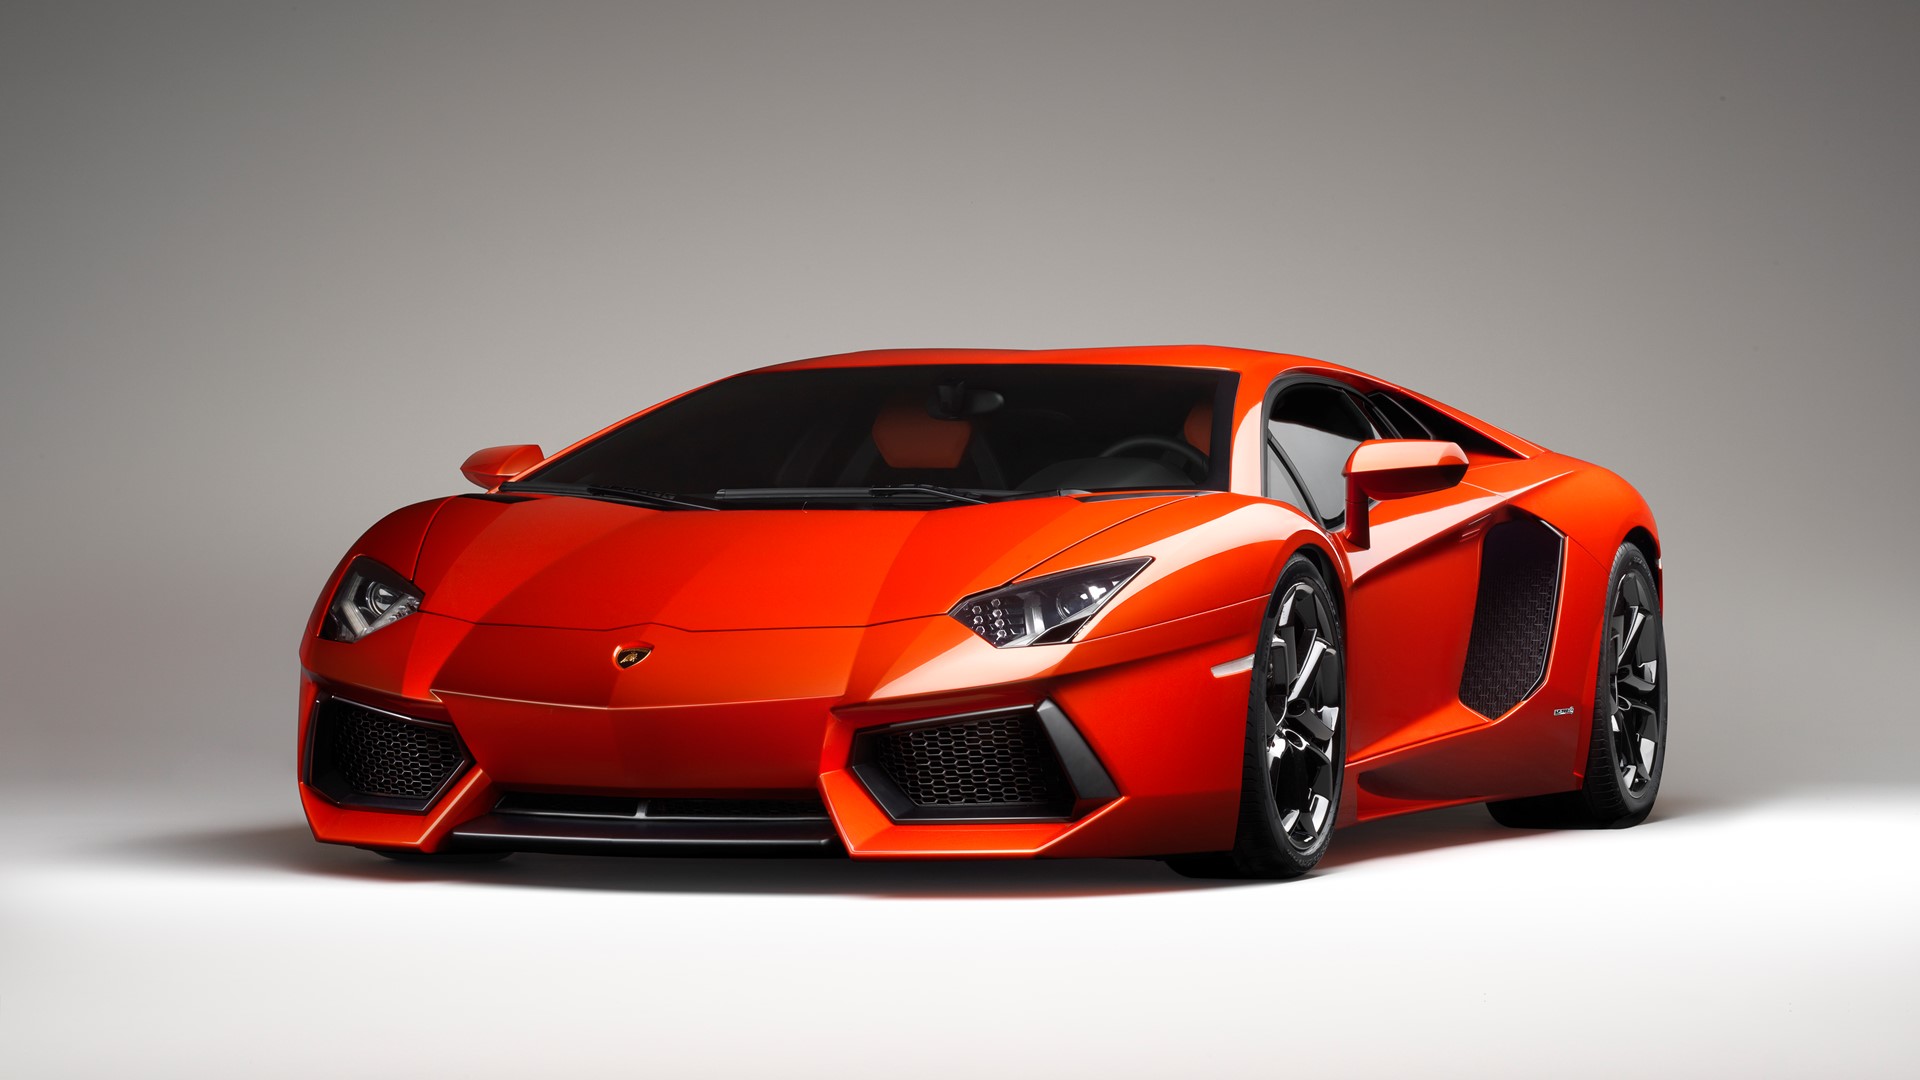 Automobili Lamborghini launches official certified pre−owned program